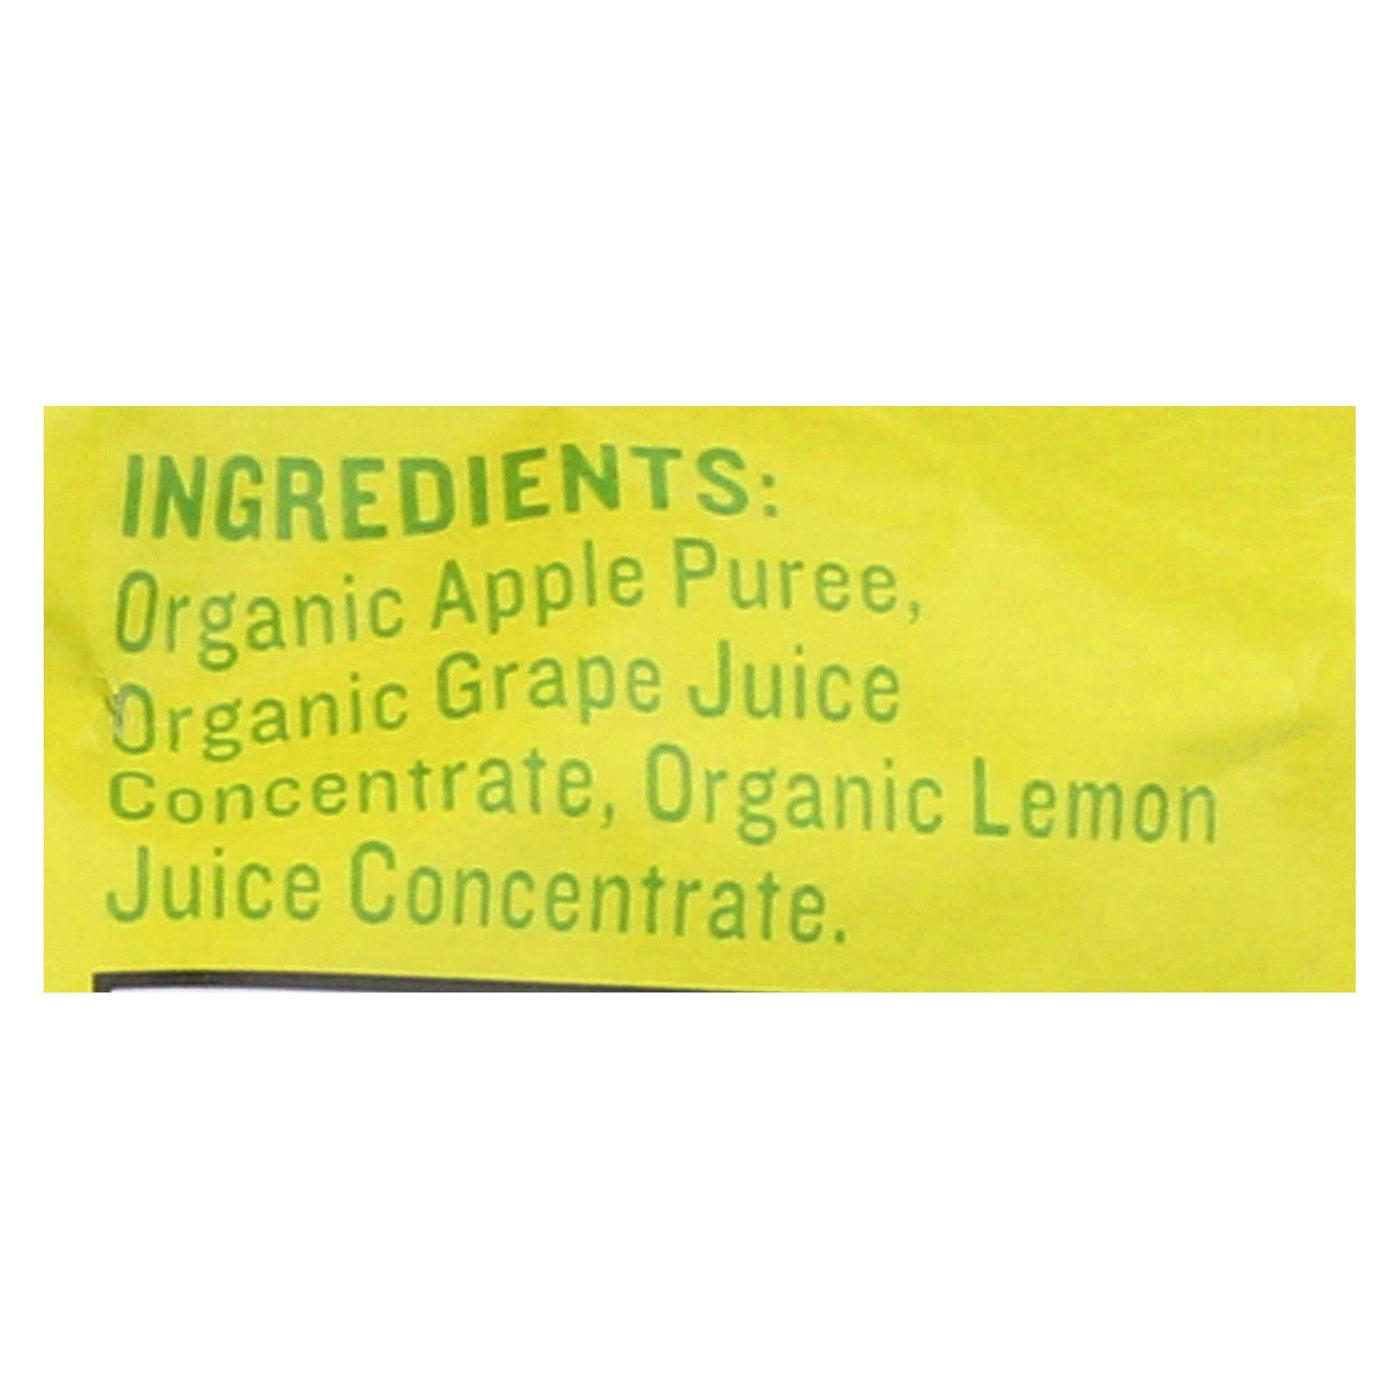 Peter Rabbit Organics Fruit Snacks - Apple And Grape - Case Of 10 - 4 Oz. | OnlyNaturals.us